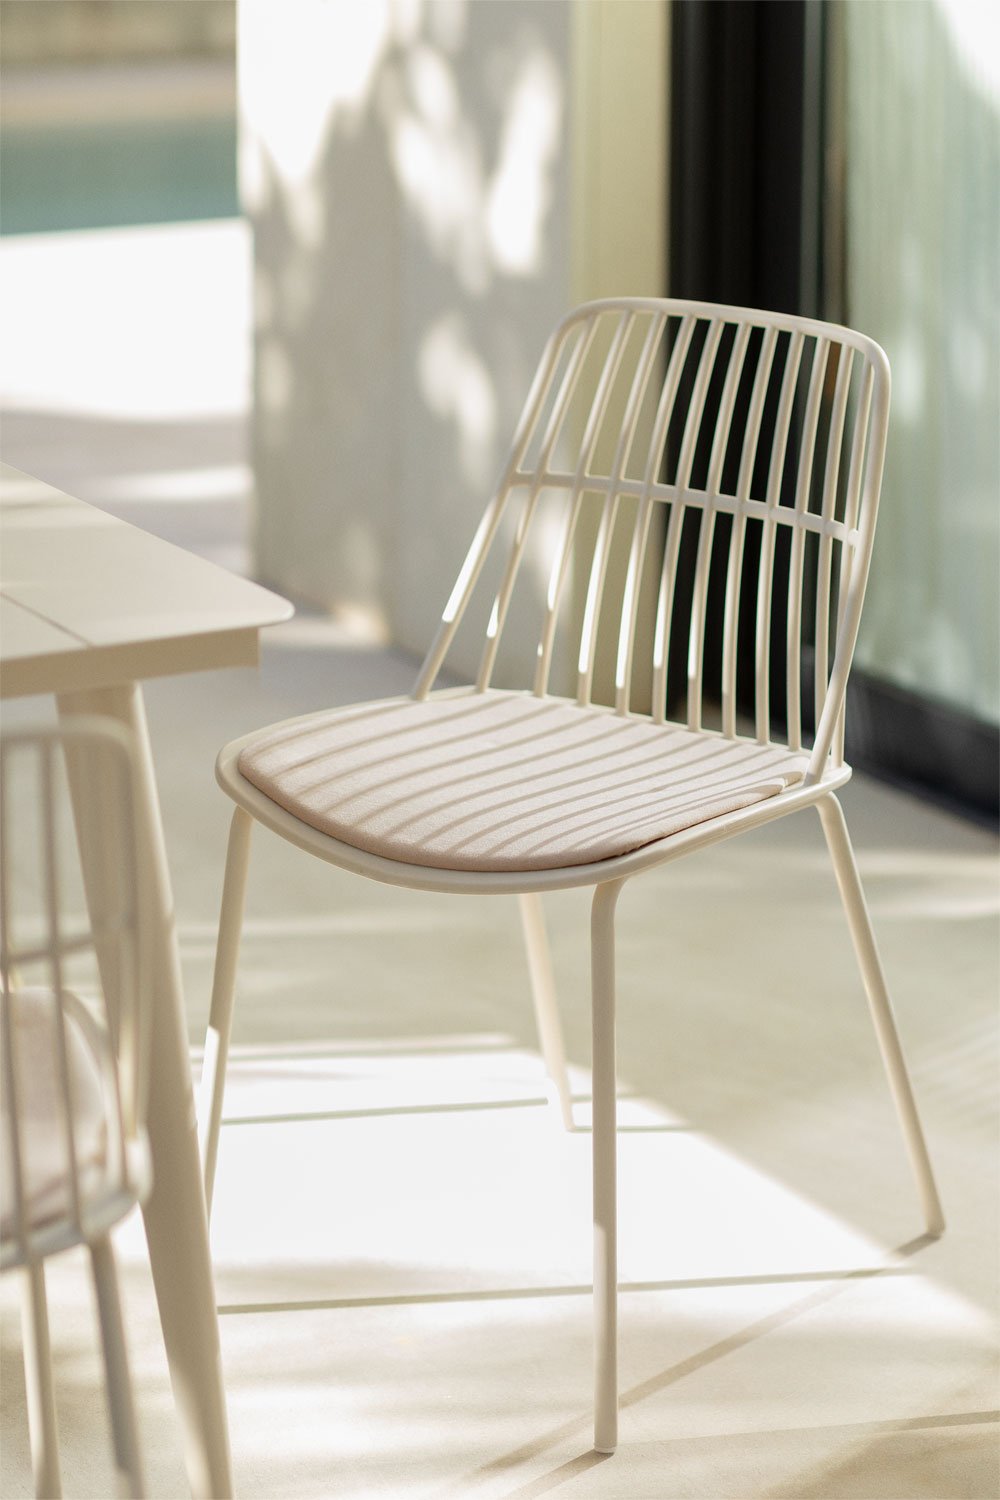 Maeba Garden Chair, gallery image 1